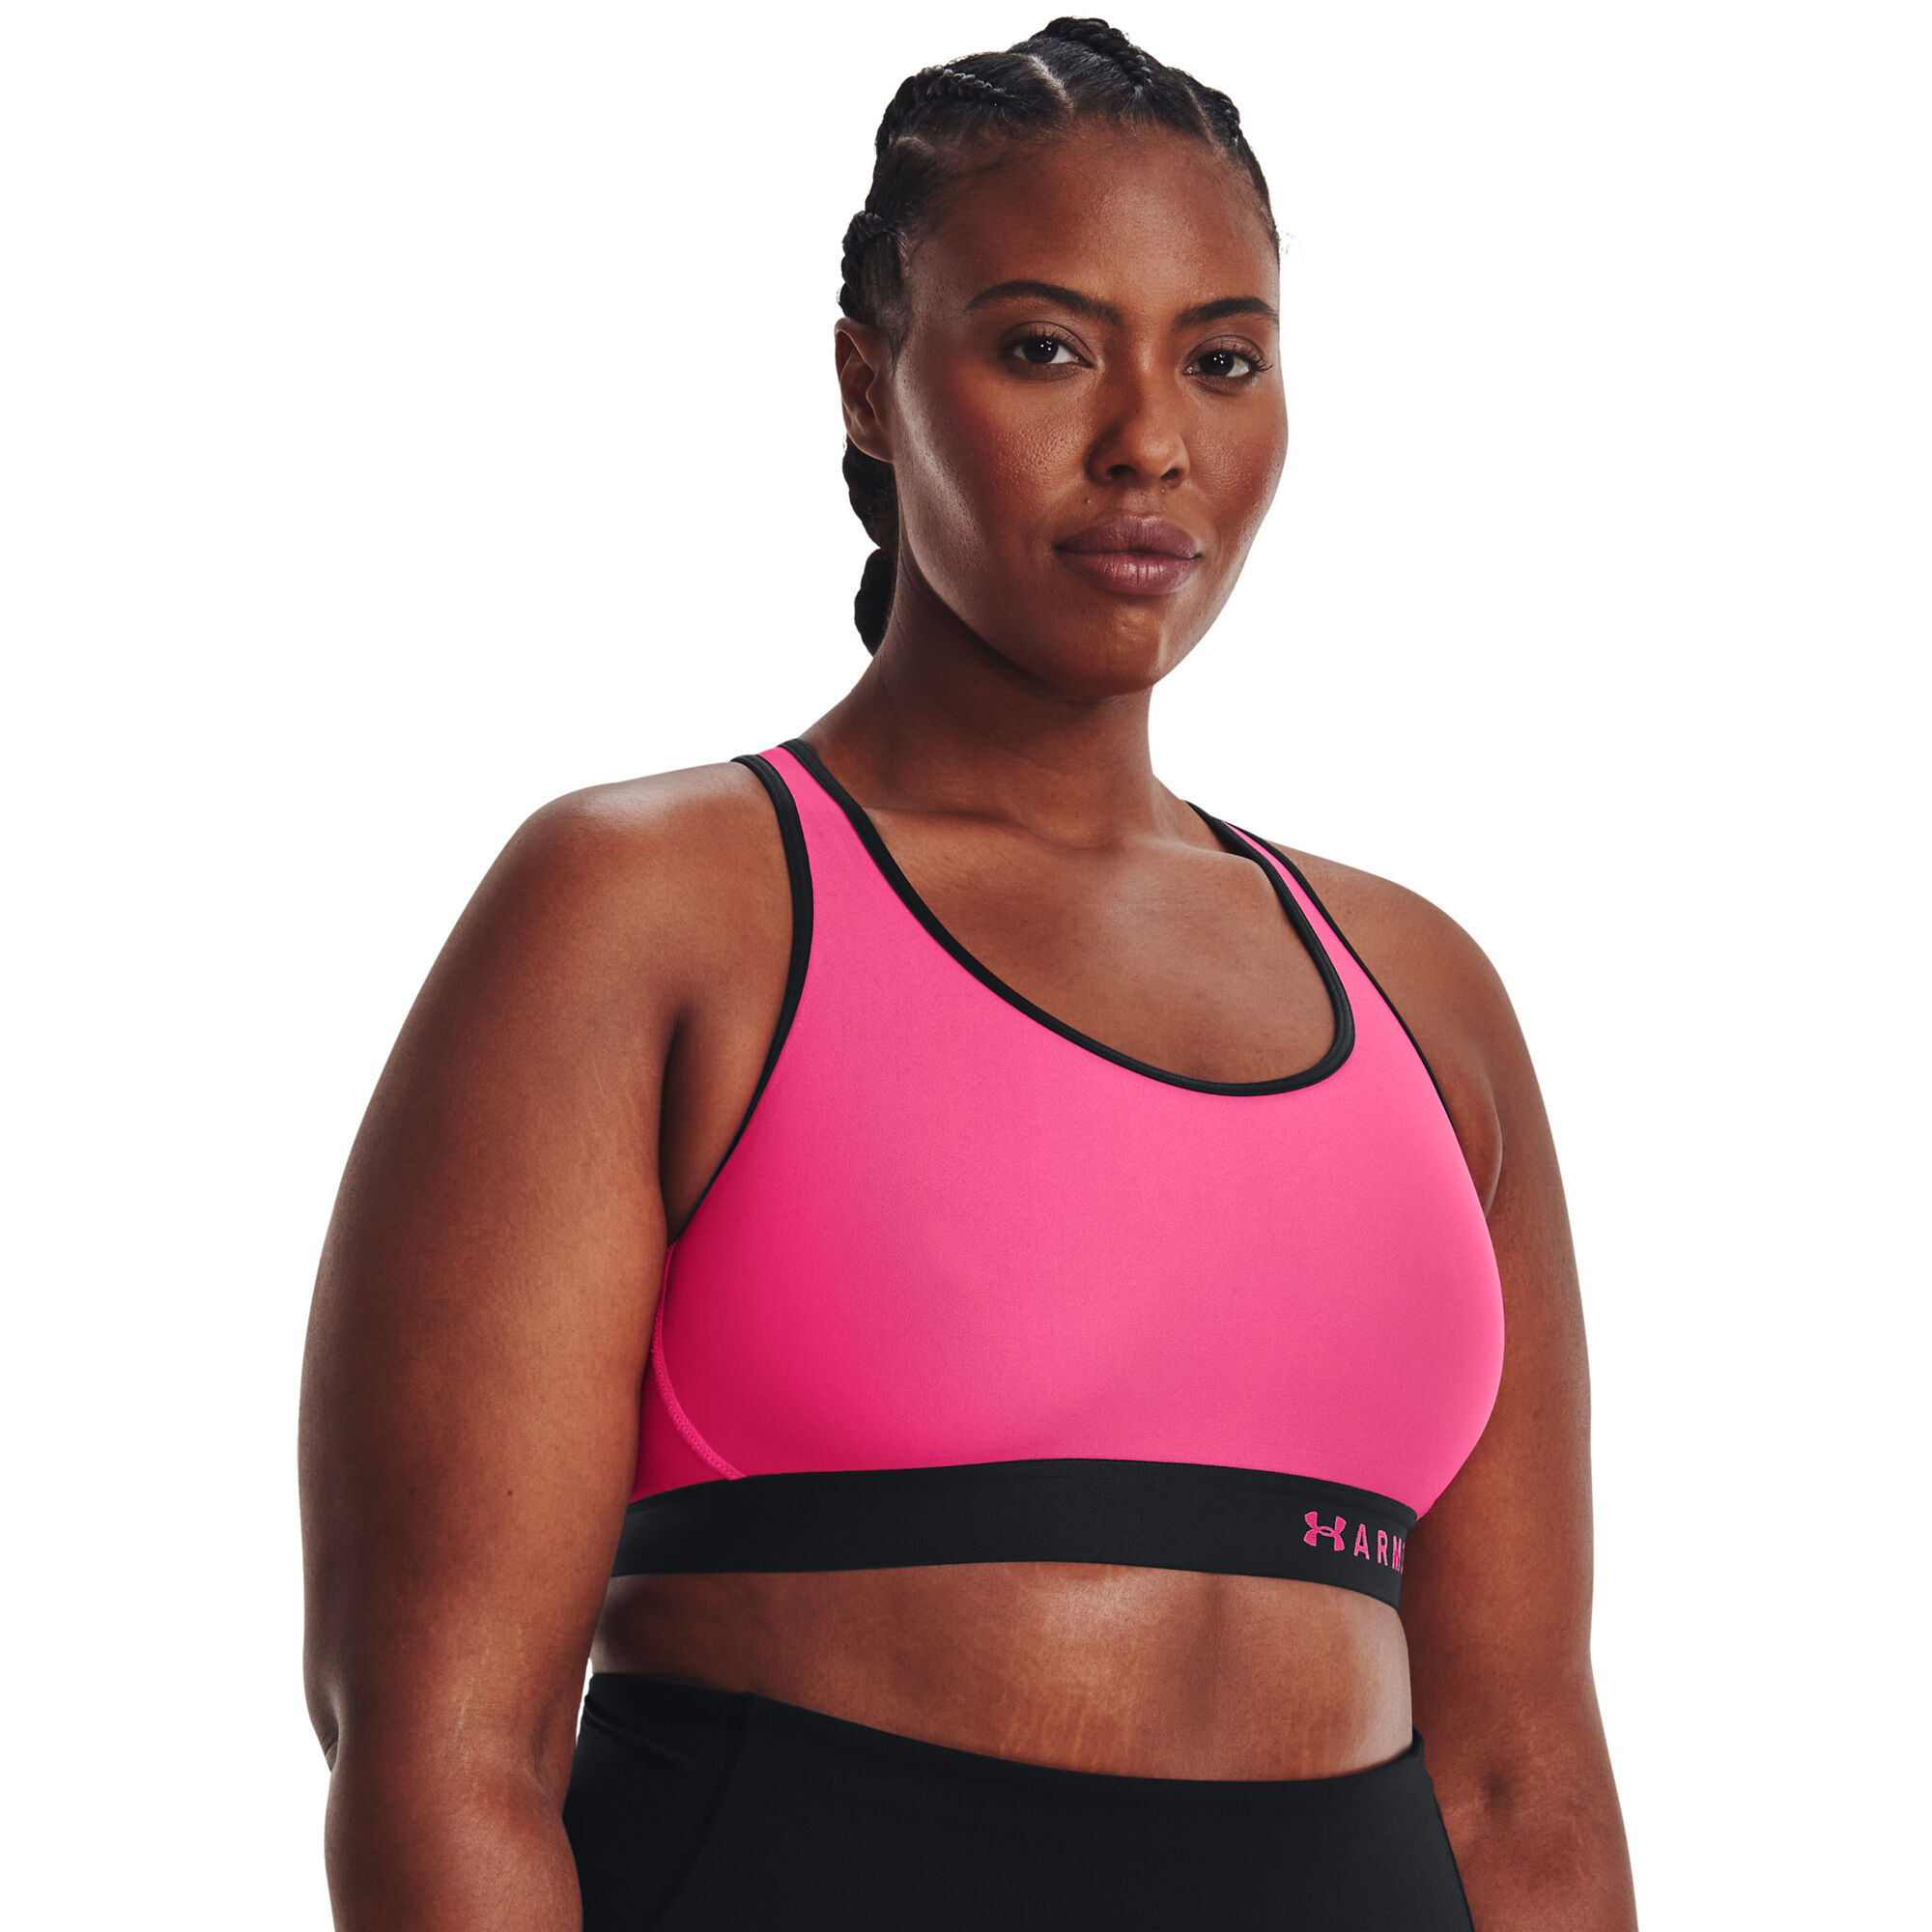 Buy Under Armour Mid Sports Bras Women Pink online